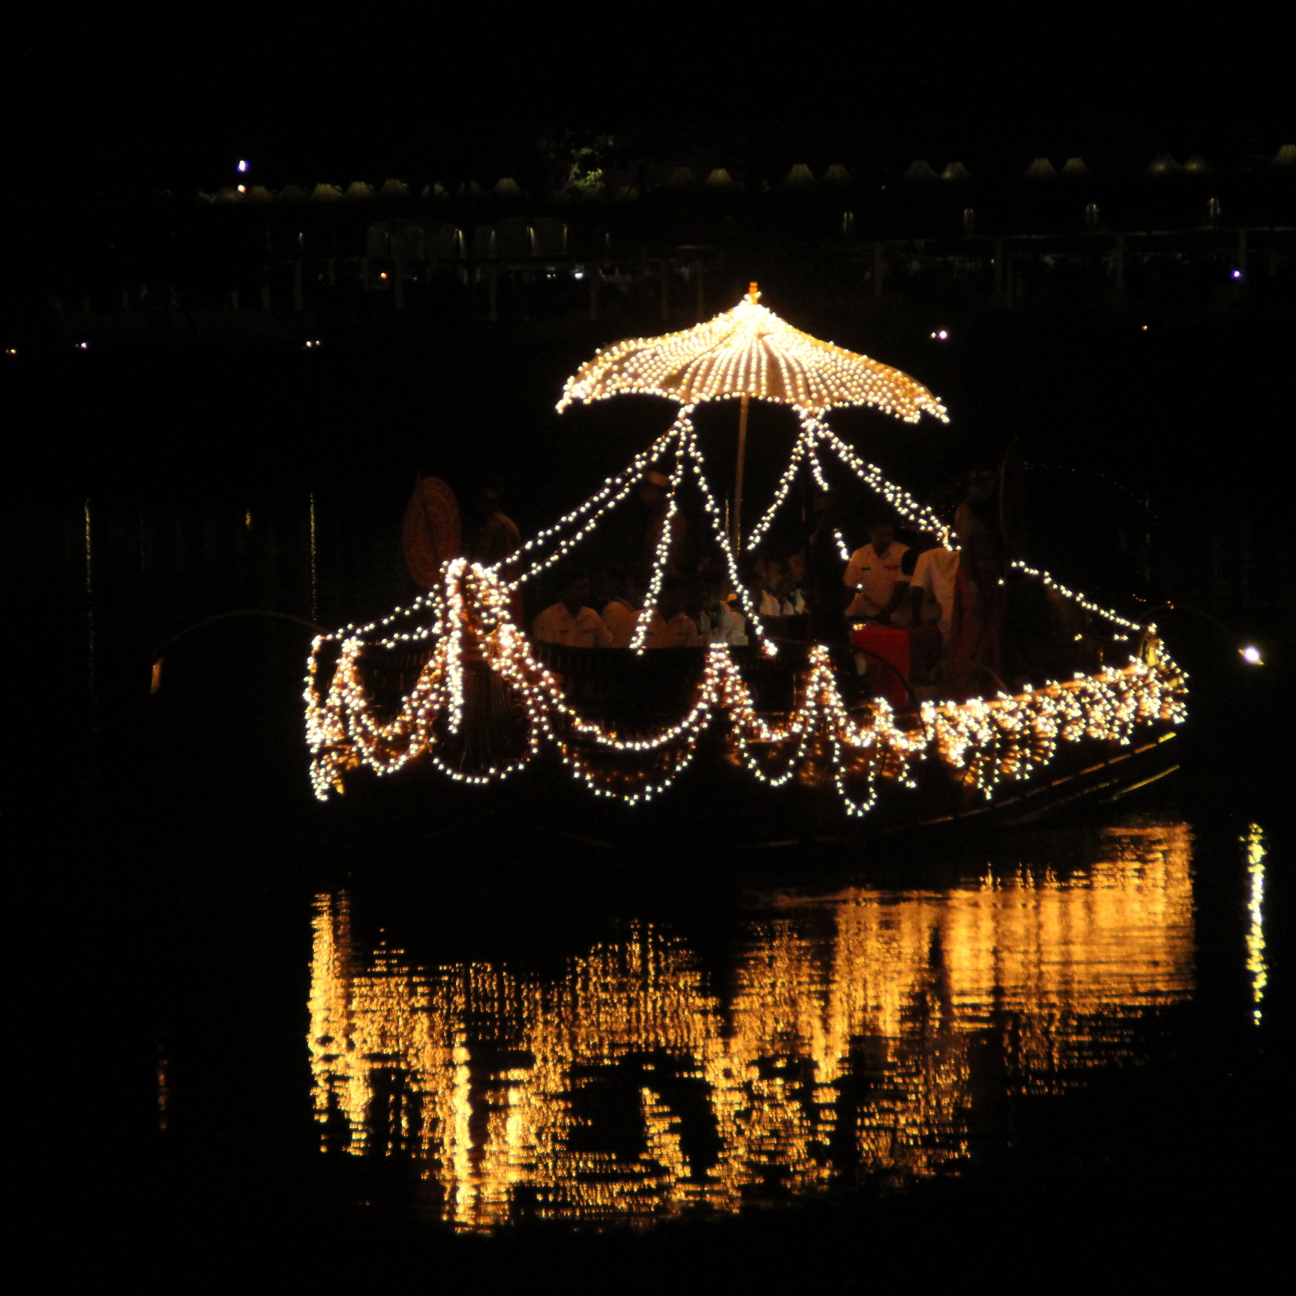 Boat of lights